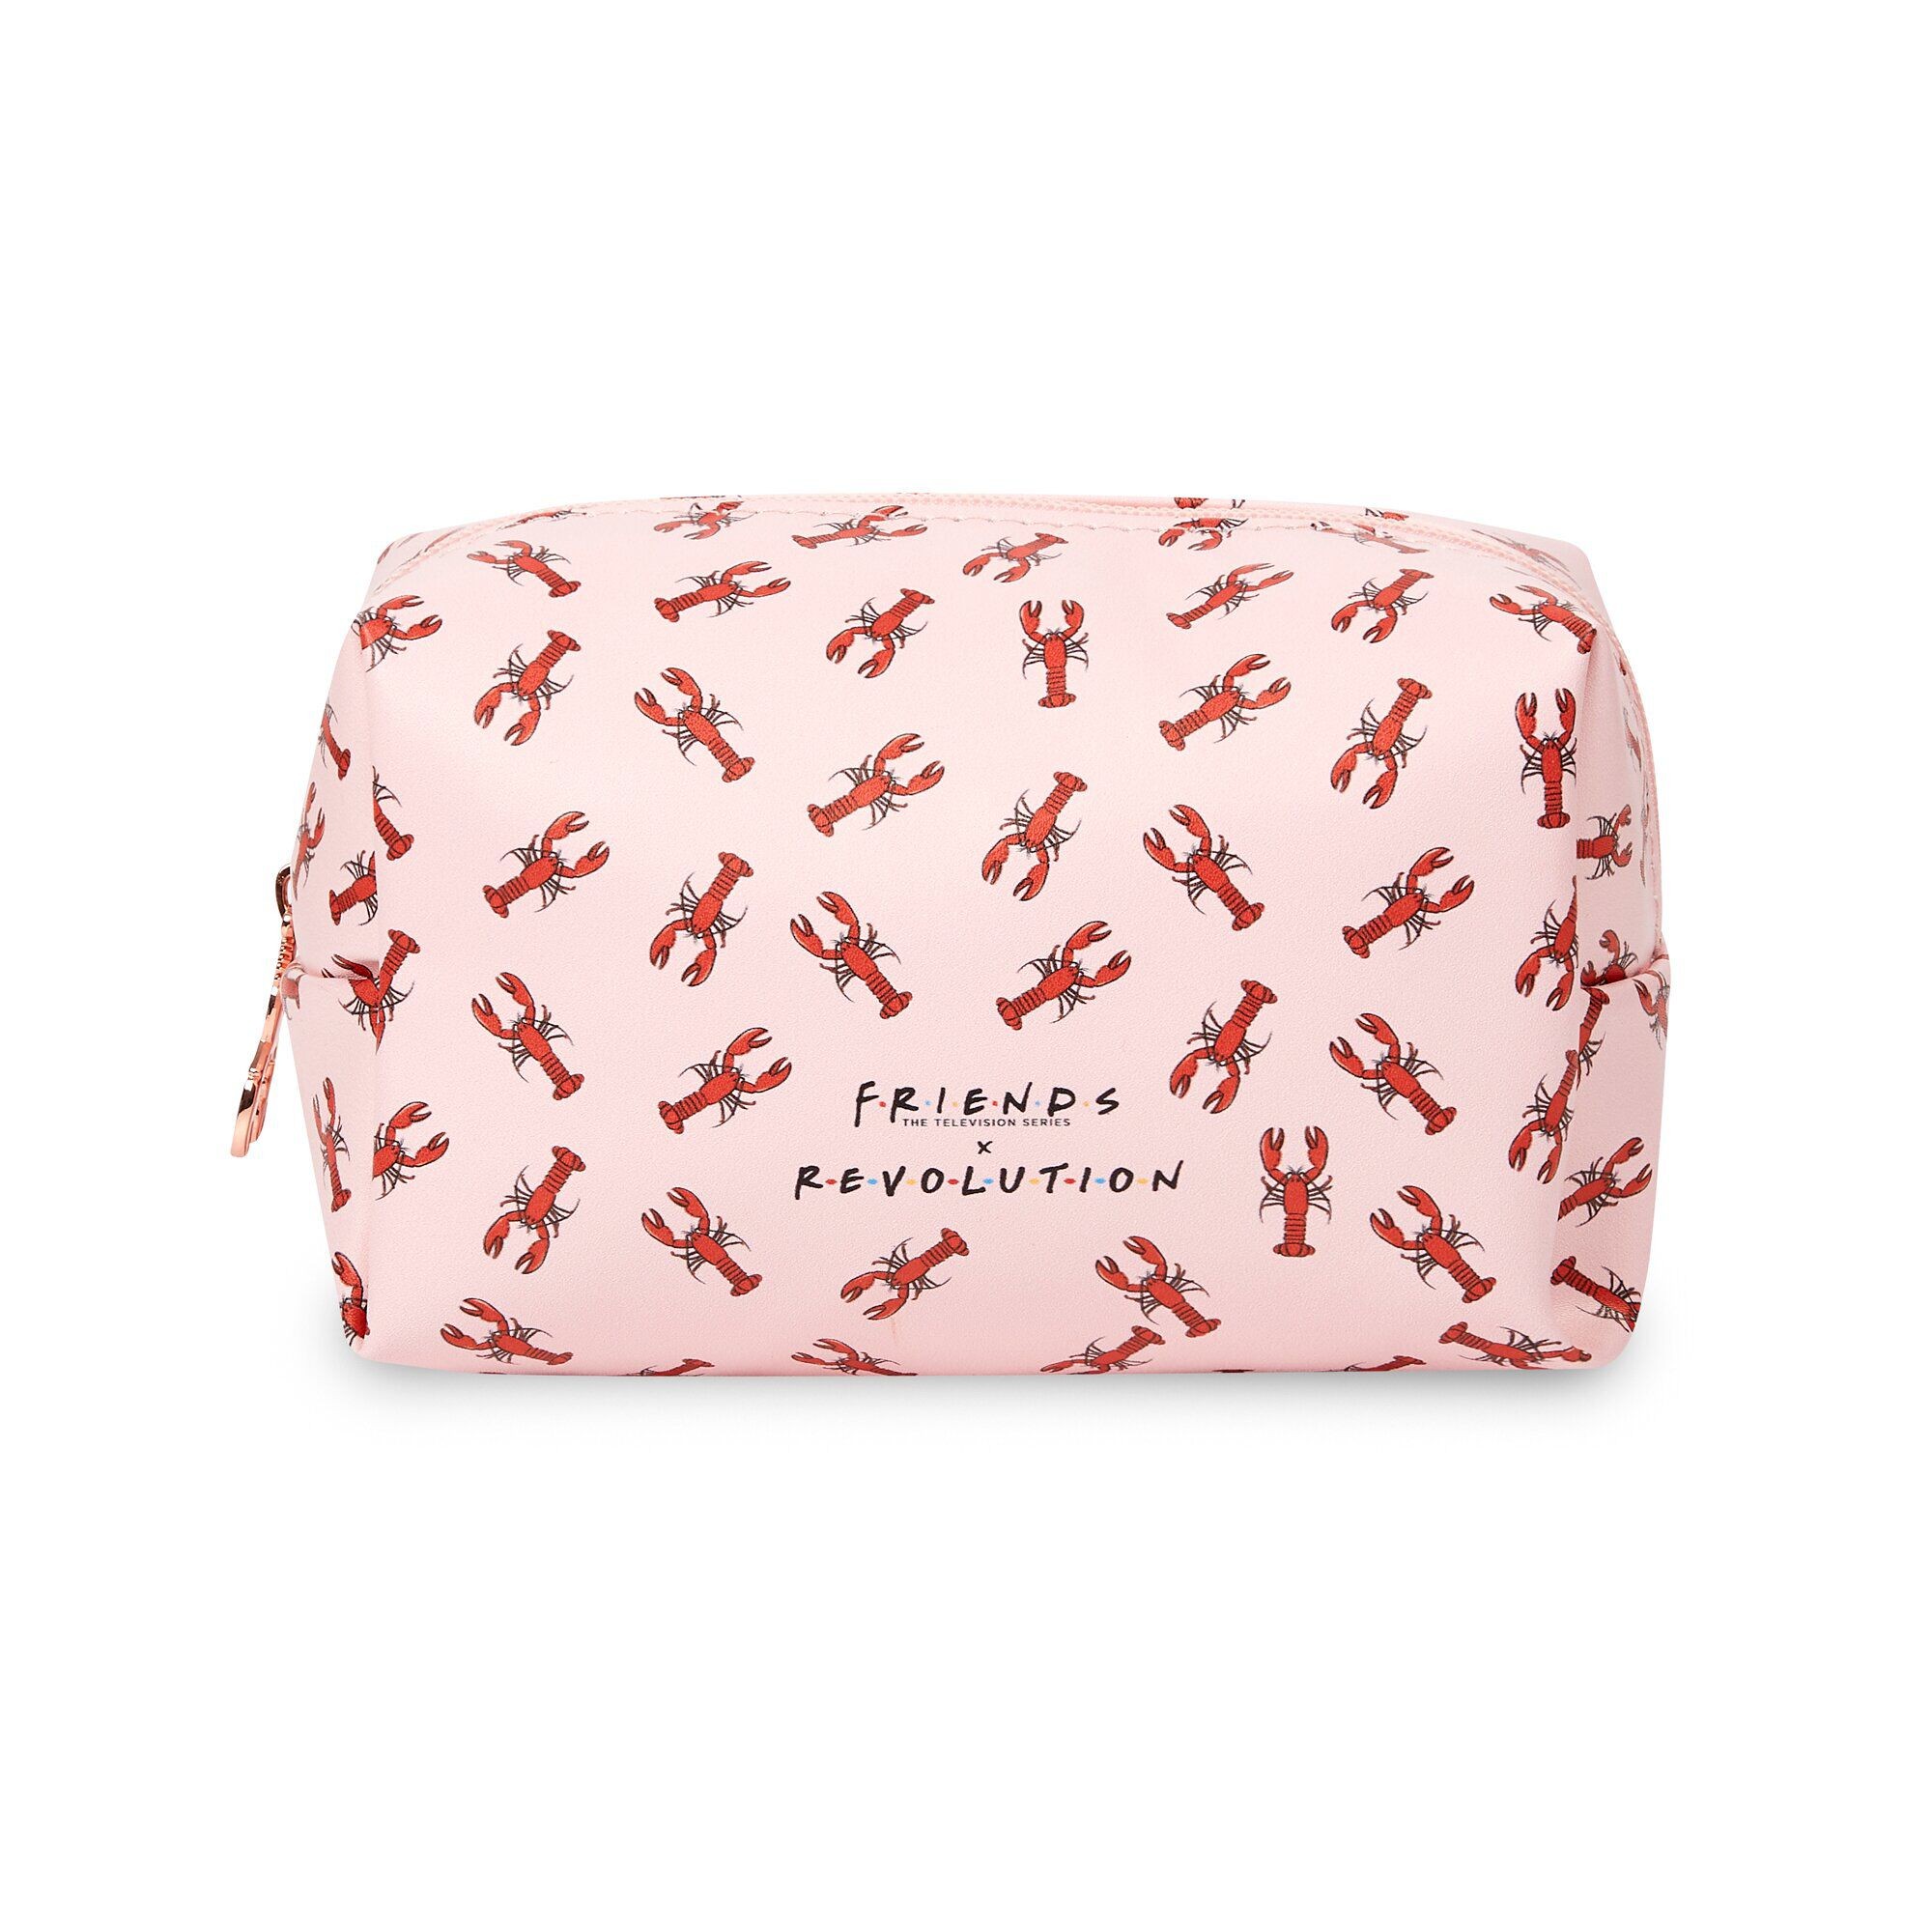 Makeup Revolution X Friends - Lobster Cosmetic Bag 